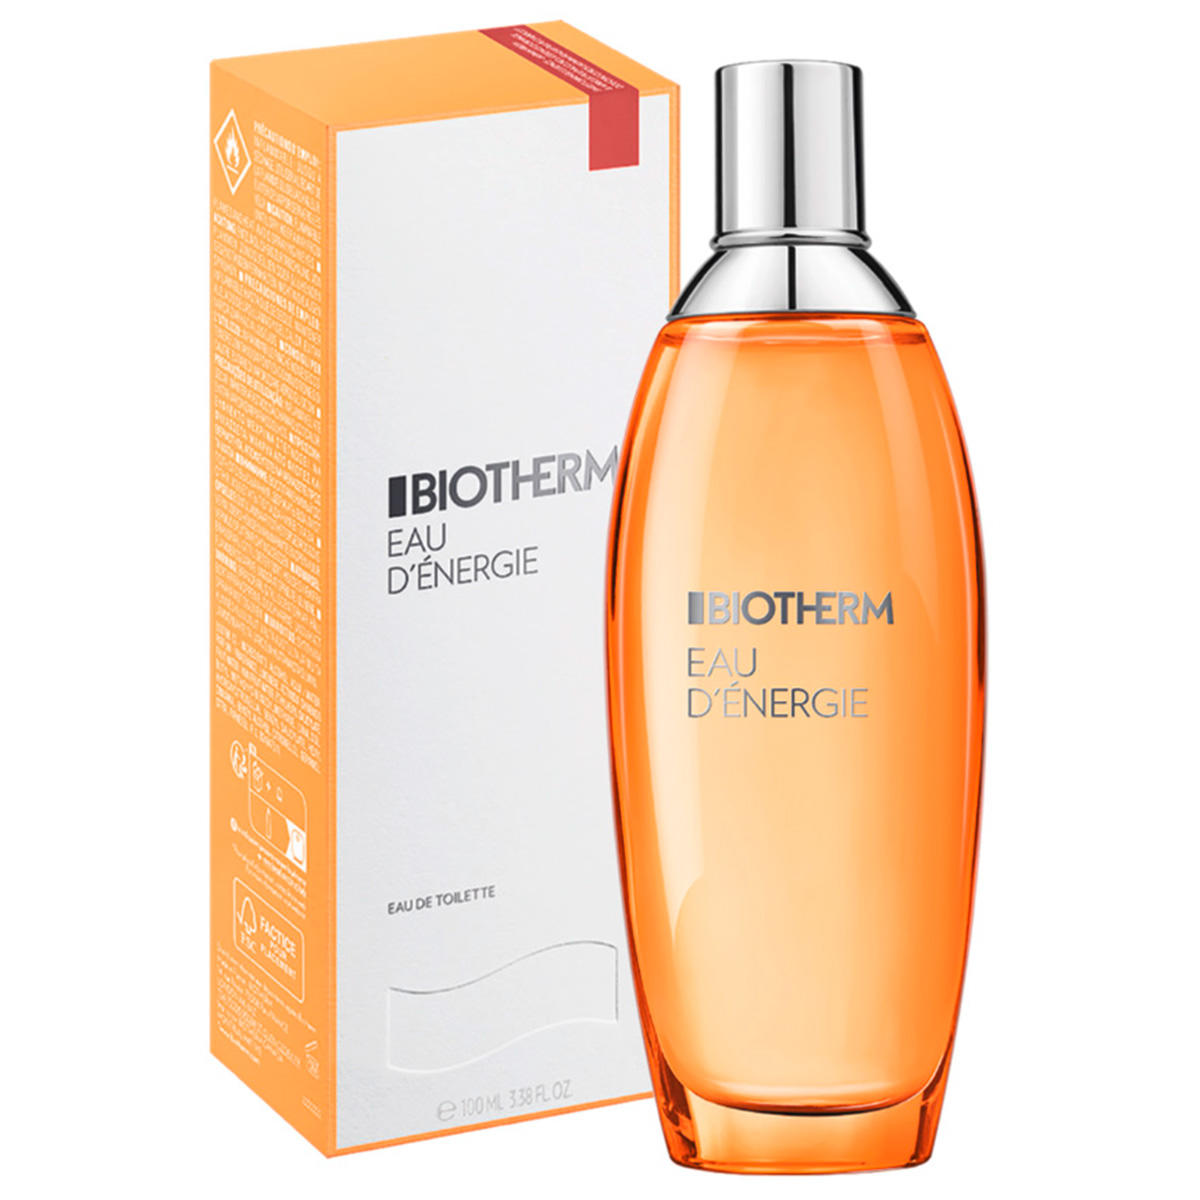 Biotherm Eau D'Énergie body fragrance  - 1